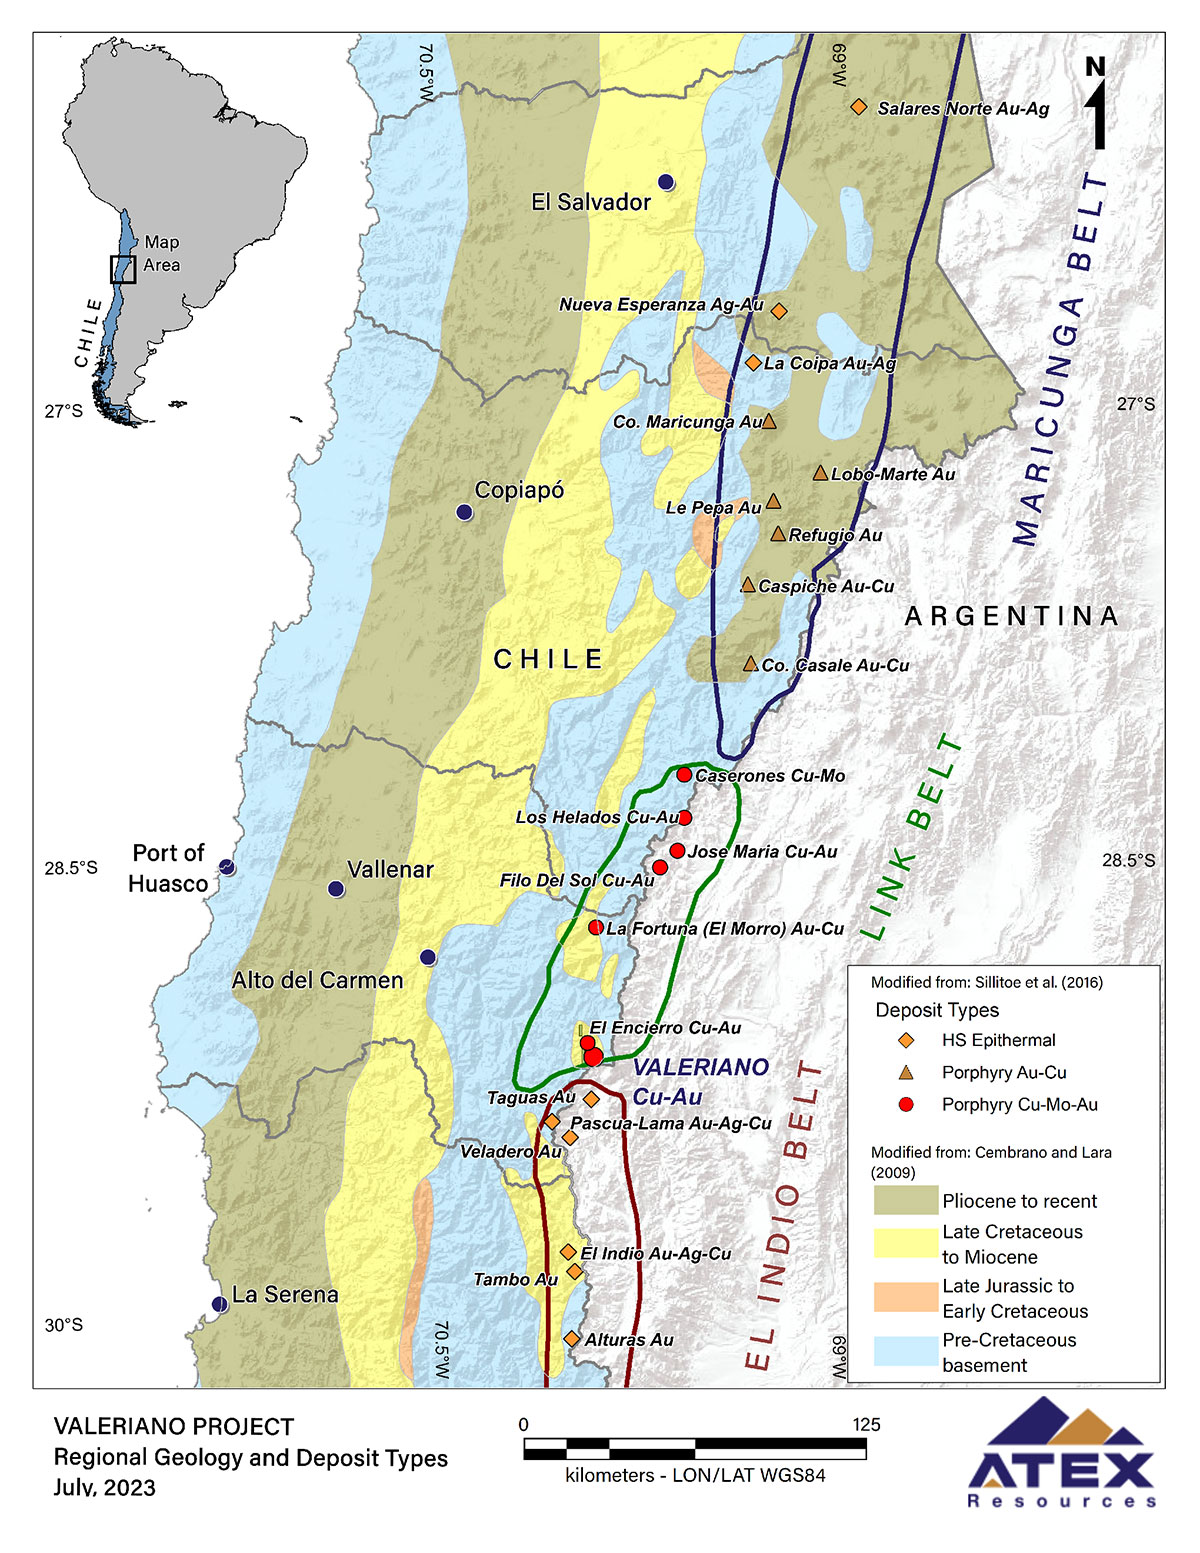 Figure 1. Regional Geology and Mineralization